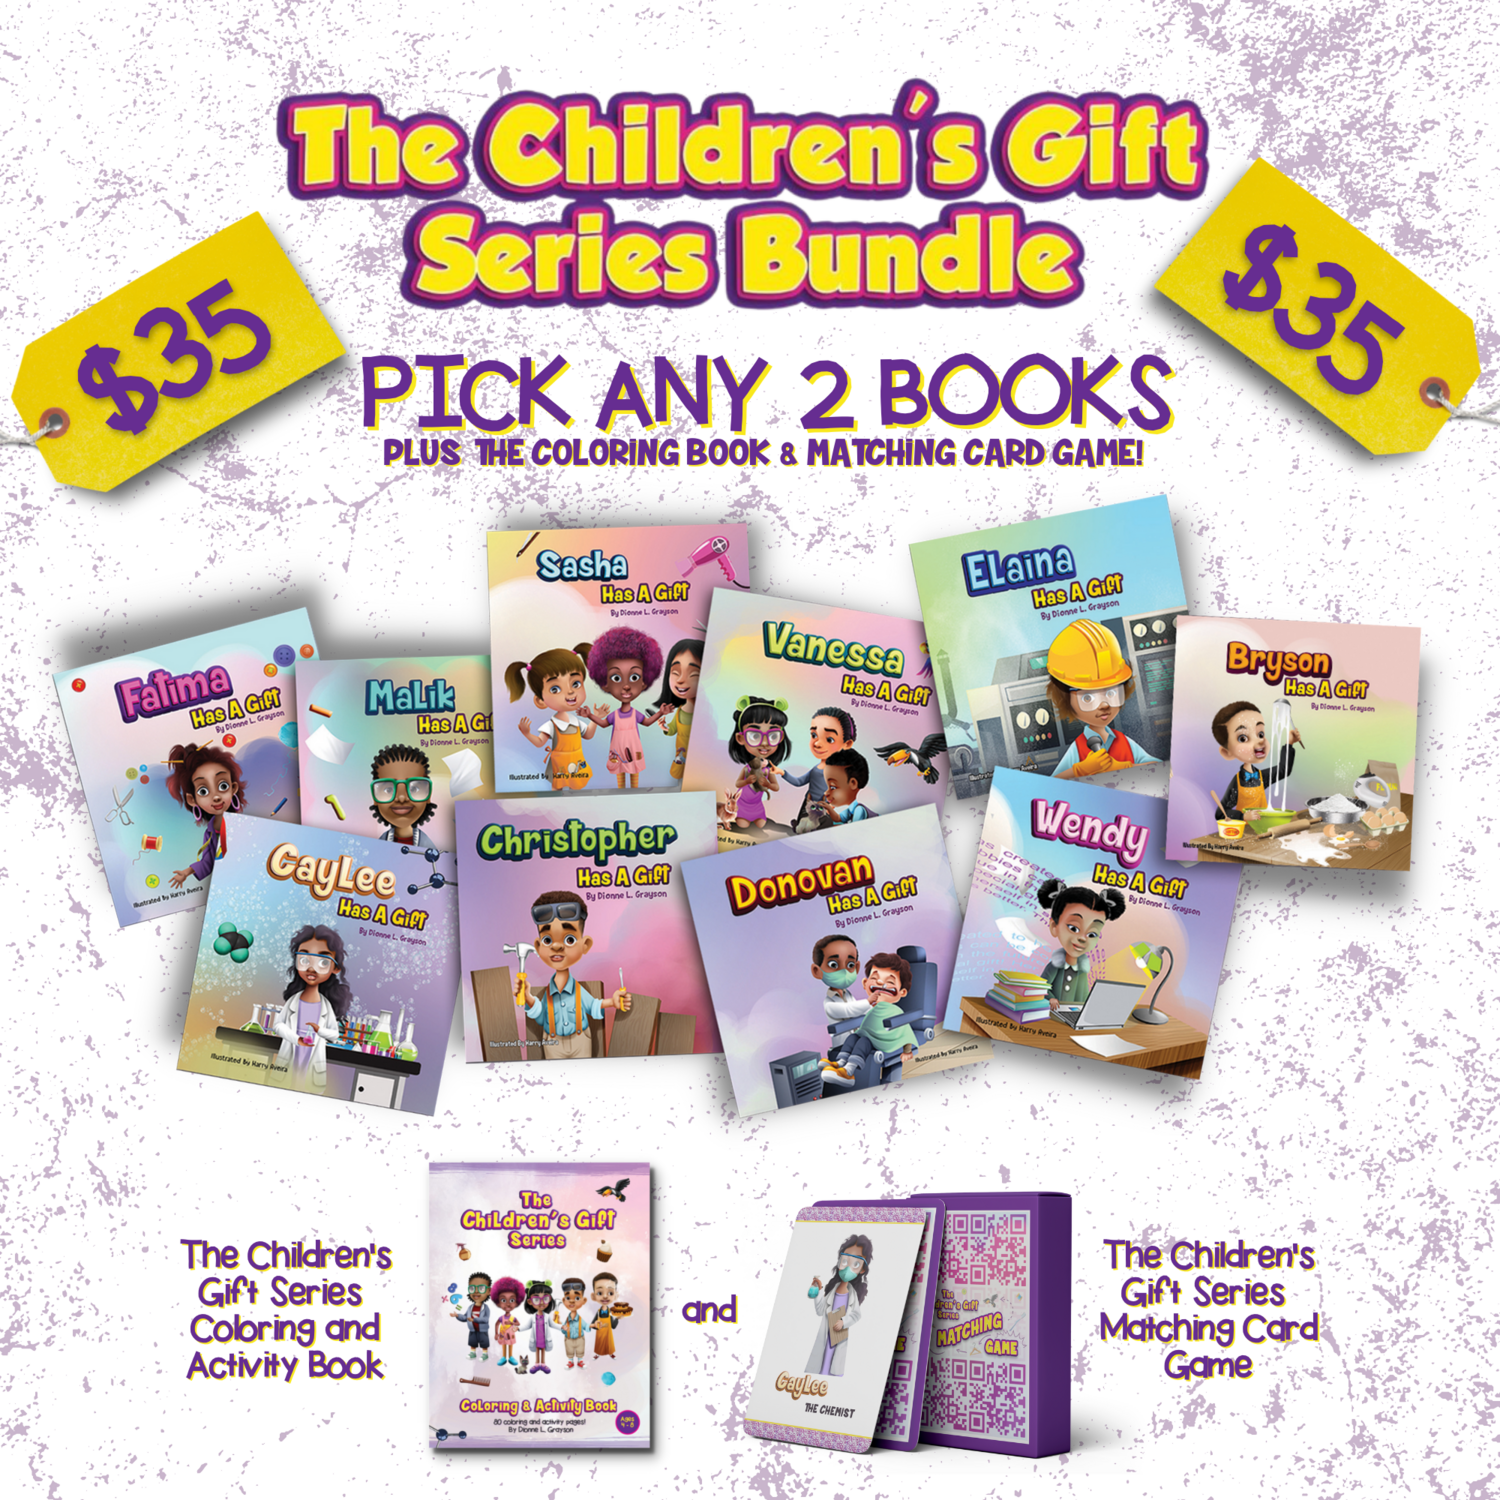 The Children's Gift Series Bundle